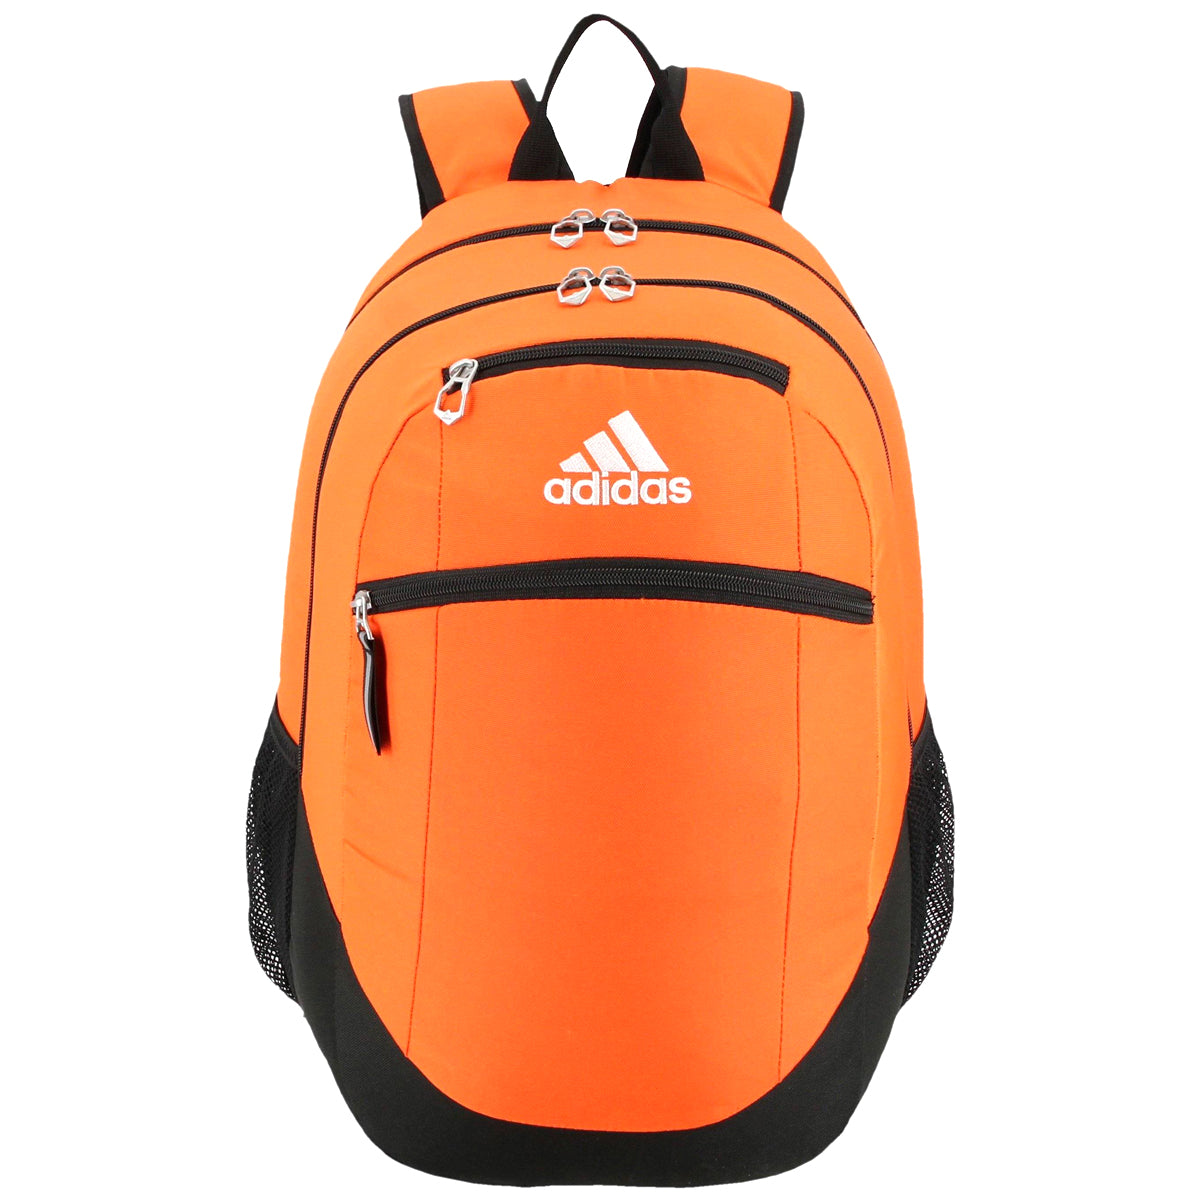 adidas Striker II Team Backpack Bags Adidas One Size Orange/Black/White 